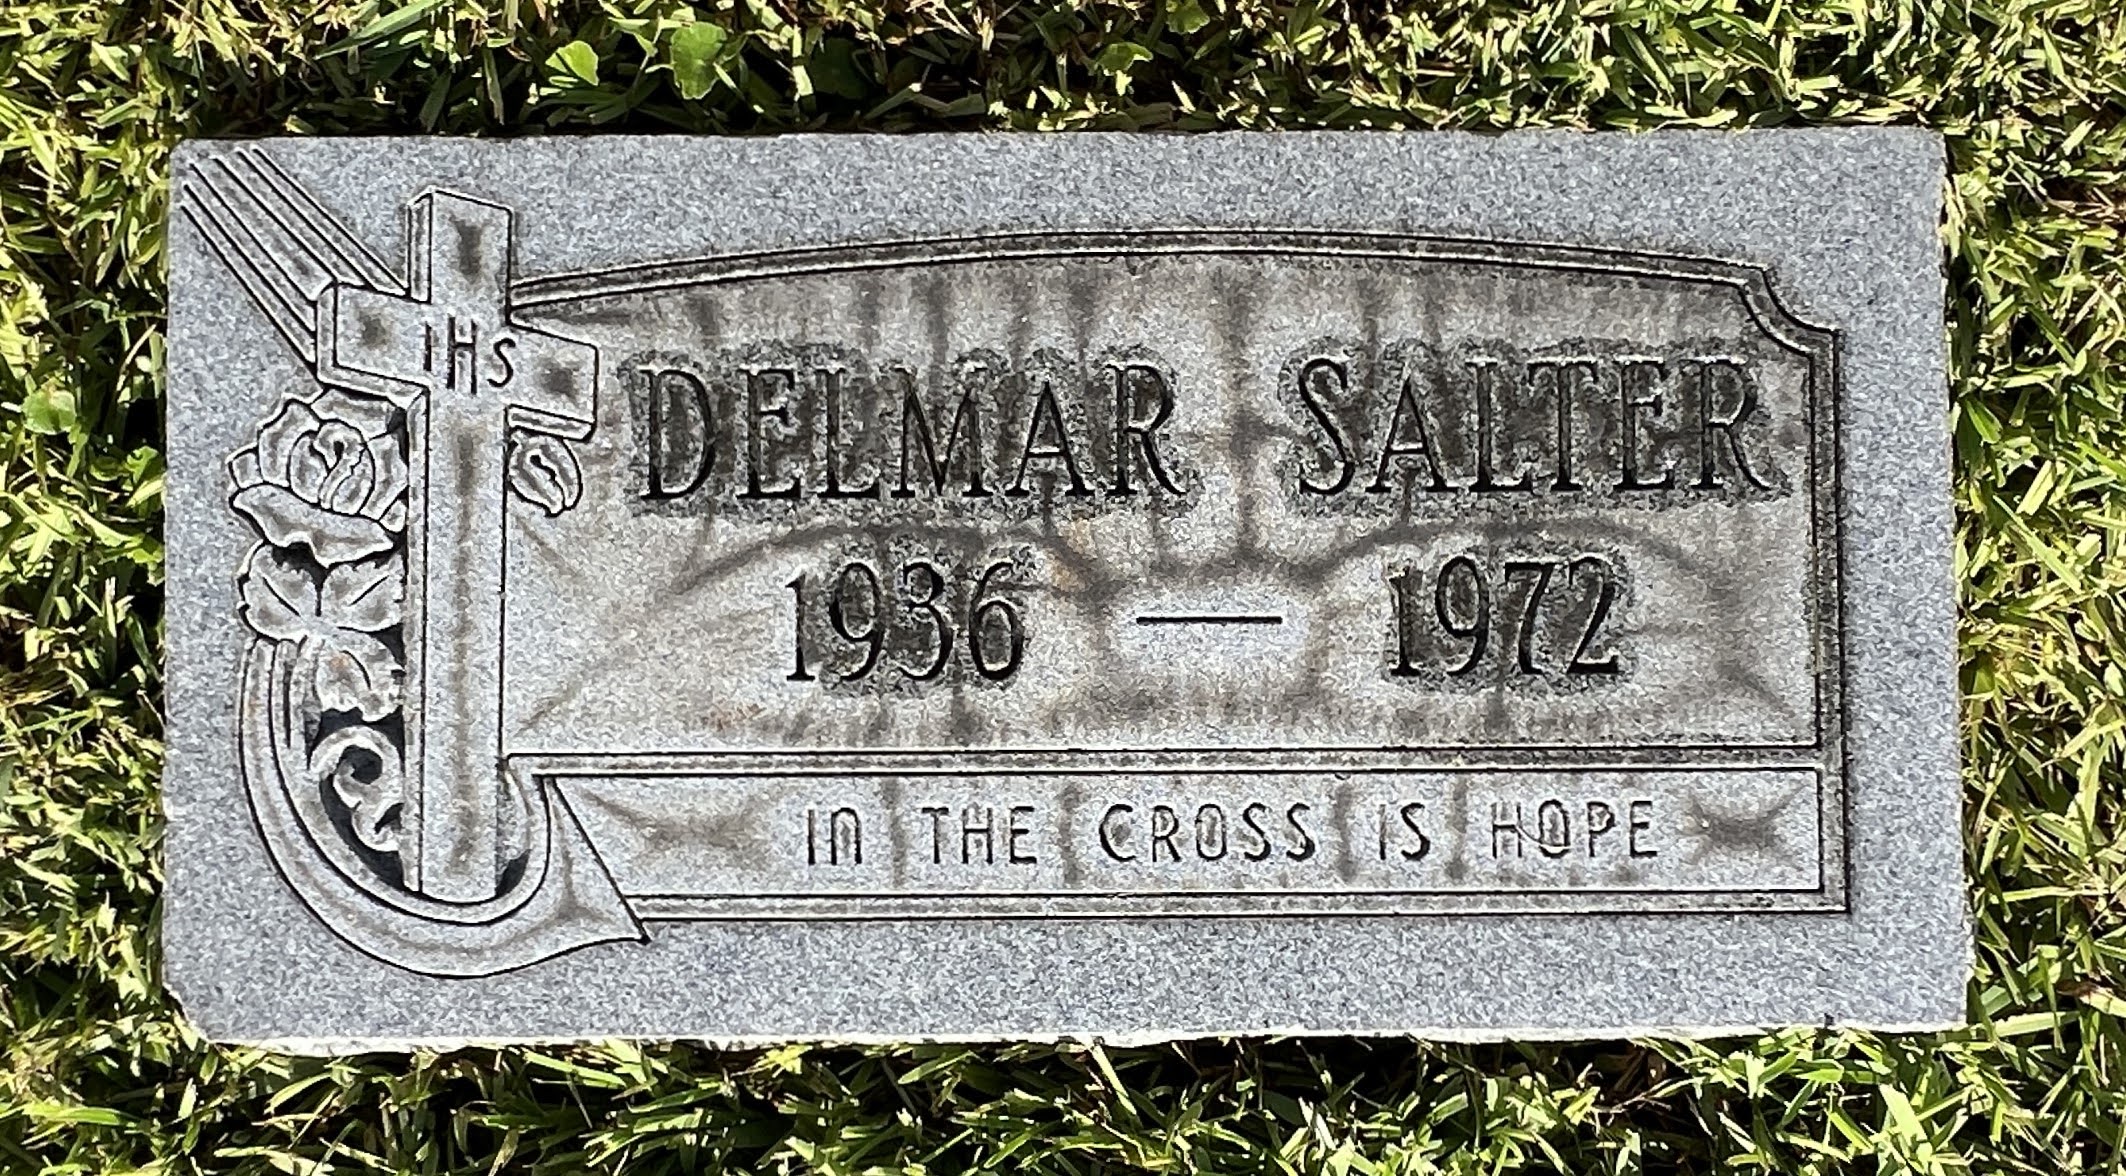 Delmar Salter